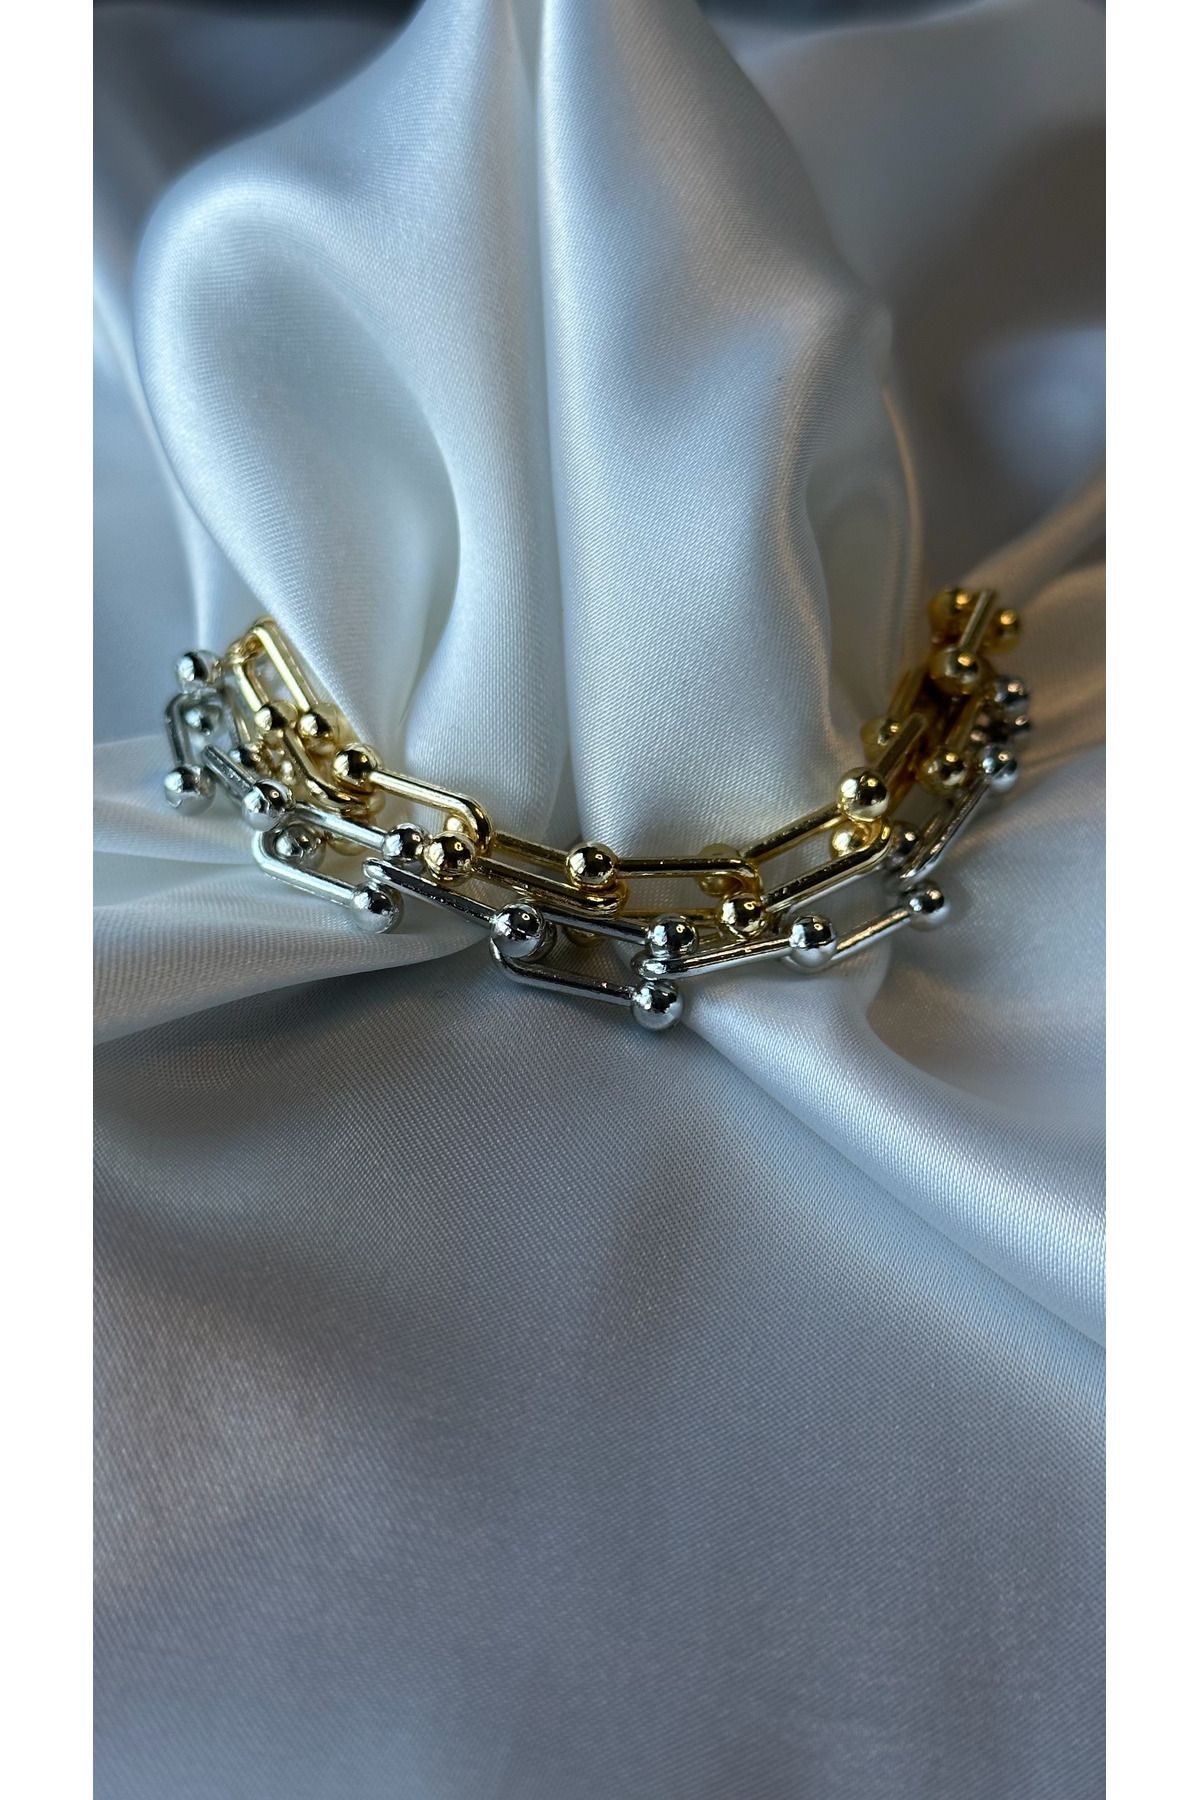 stainless steell 2'li Tiffany Set Gold ve Silver Set Sevgiliye Hediye,Sevgililer Gününe Özel